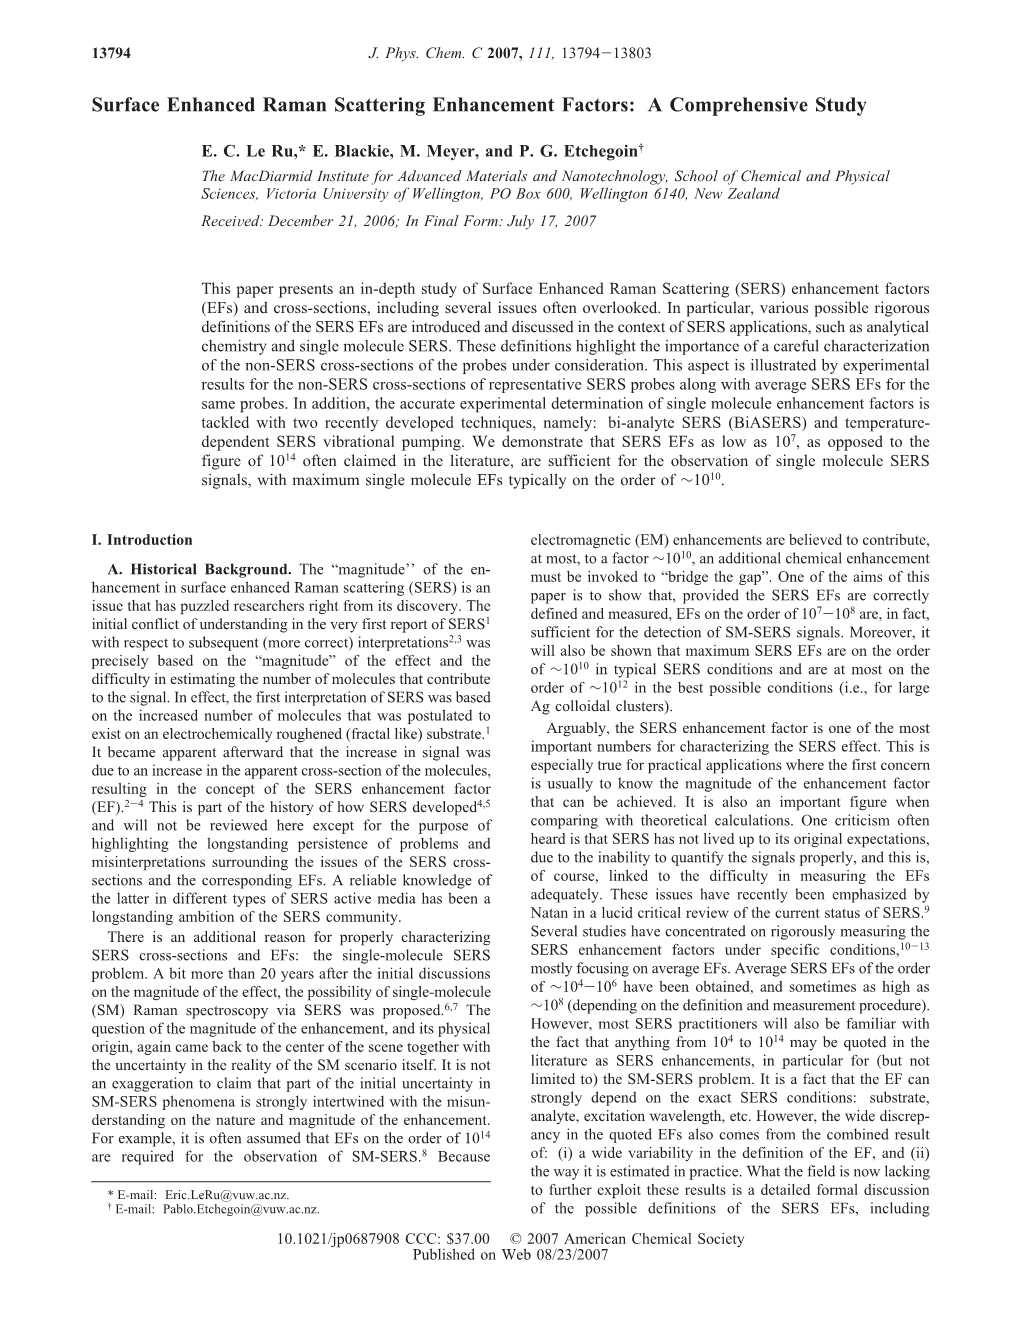 Surface Enhanced Raman Scattering Enhancement Factors: a Comprehensive Study